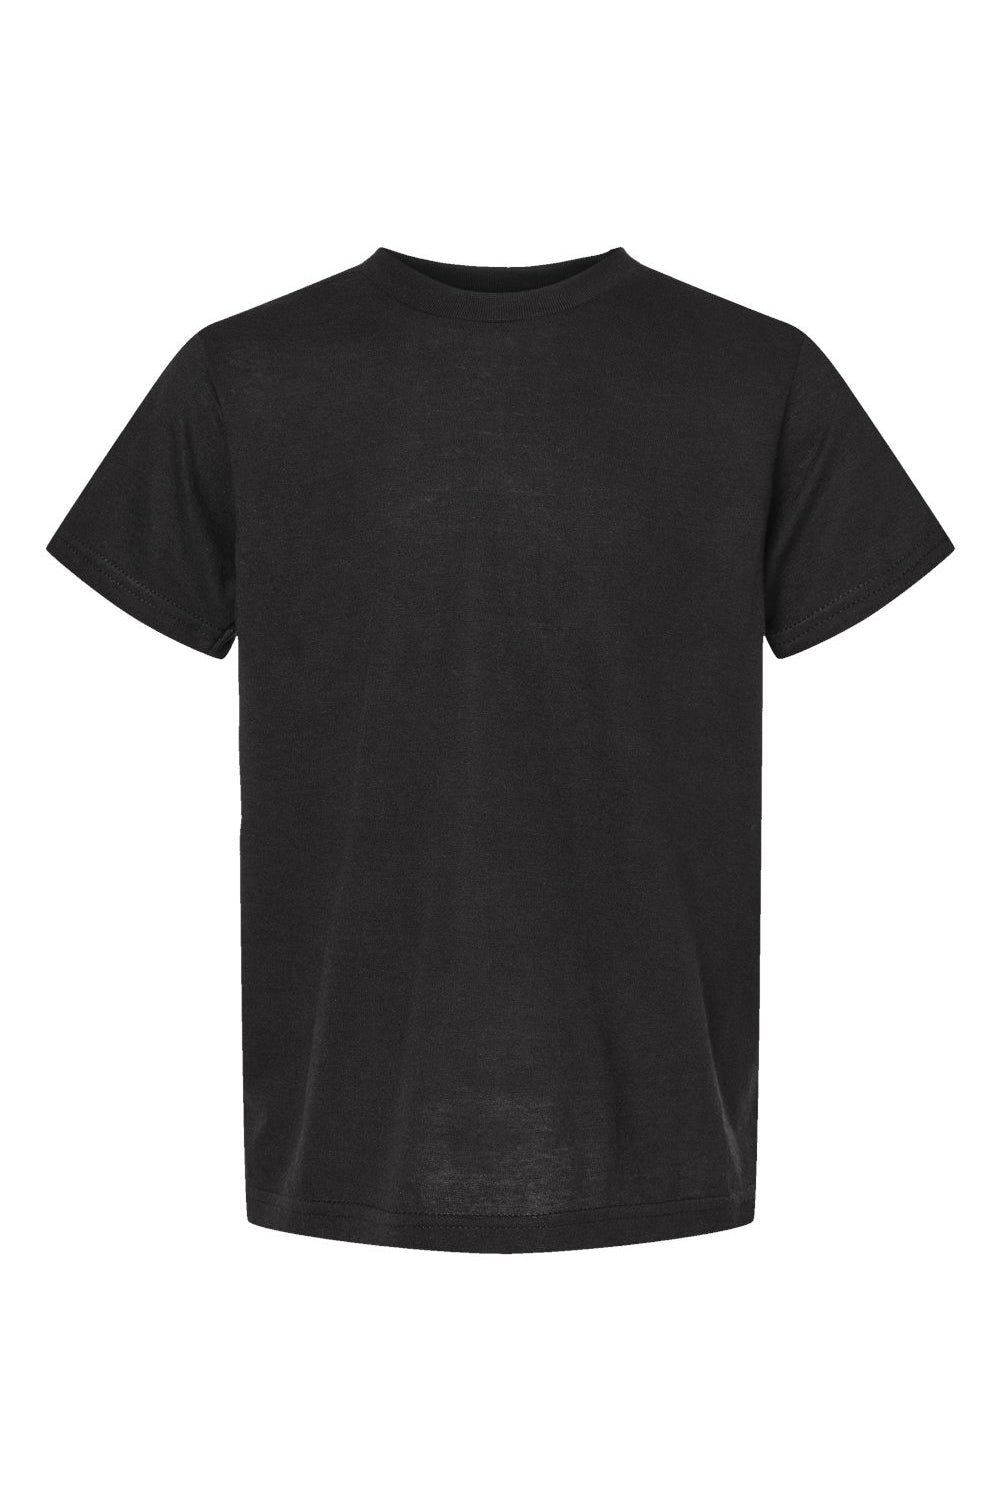 Tultex 265 Youth Poly-Rich Short Sleeve Crewneck T-Shirt Black Flat Front